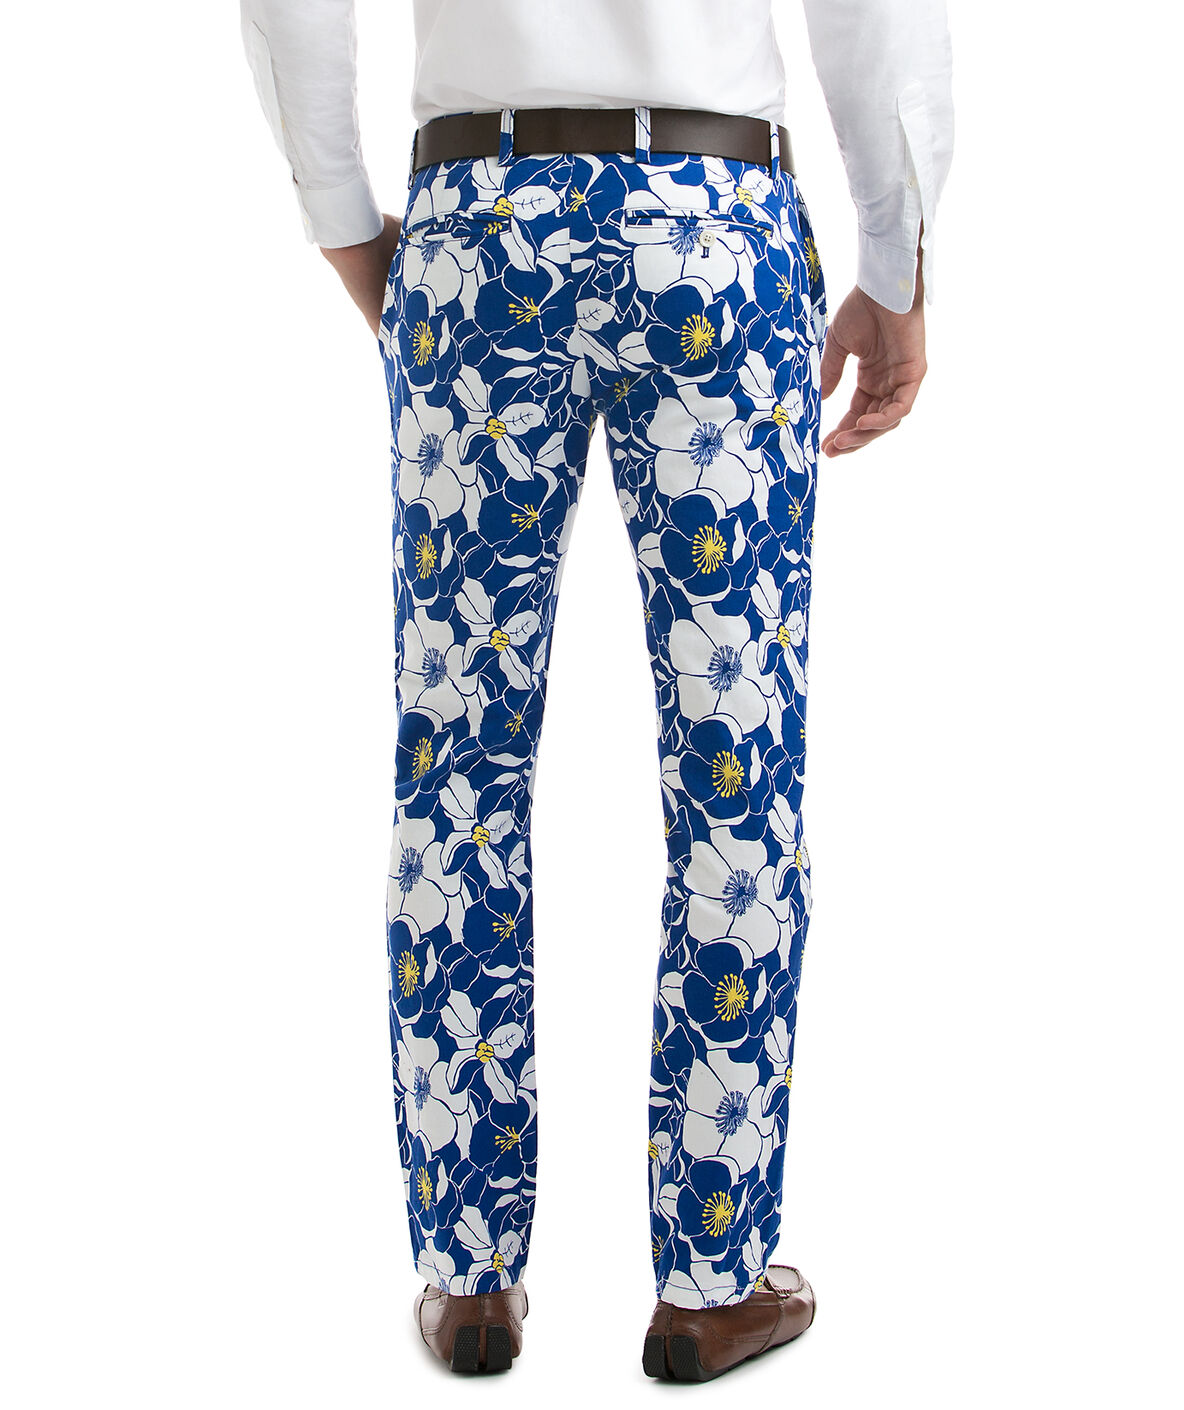 Seaside Floral Pants - White Bull Clothing Co